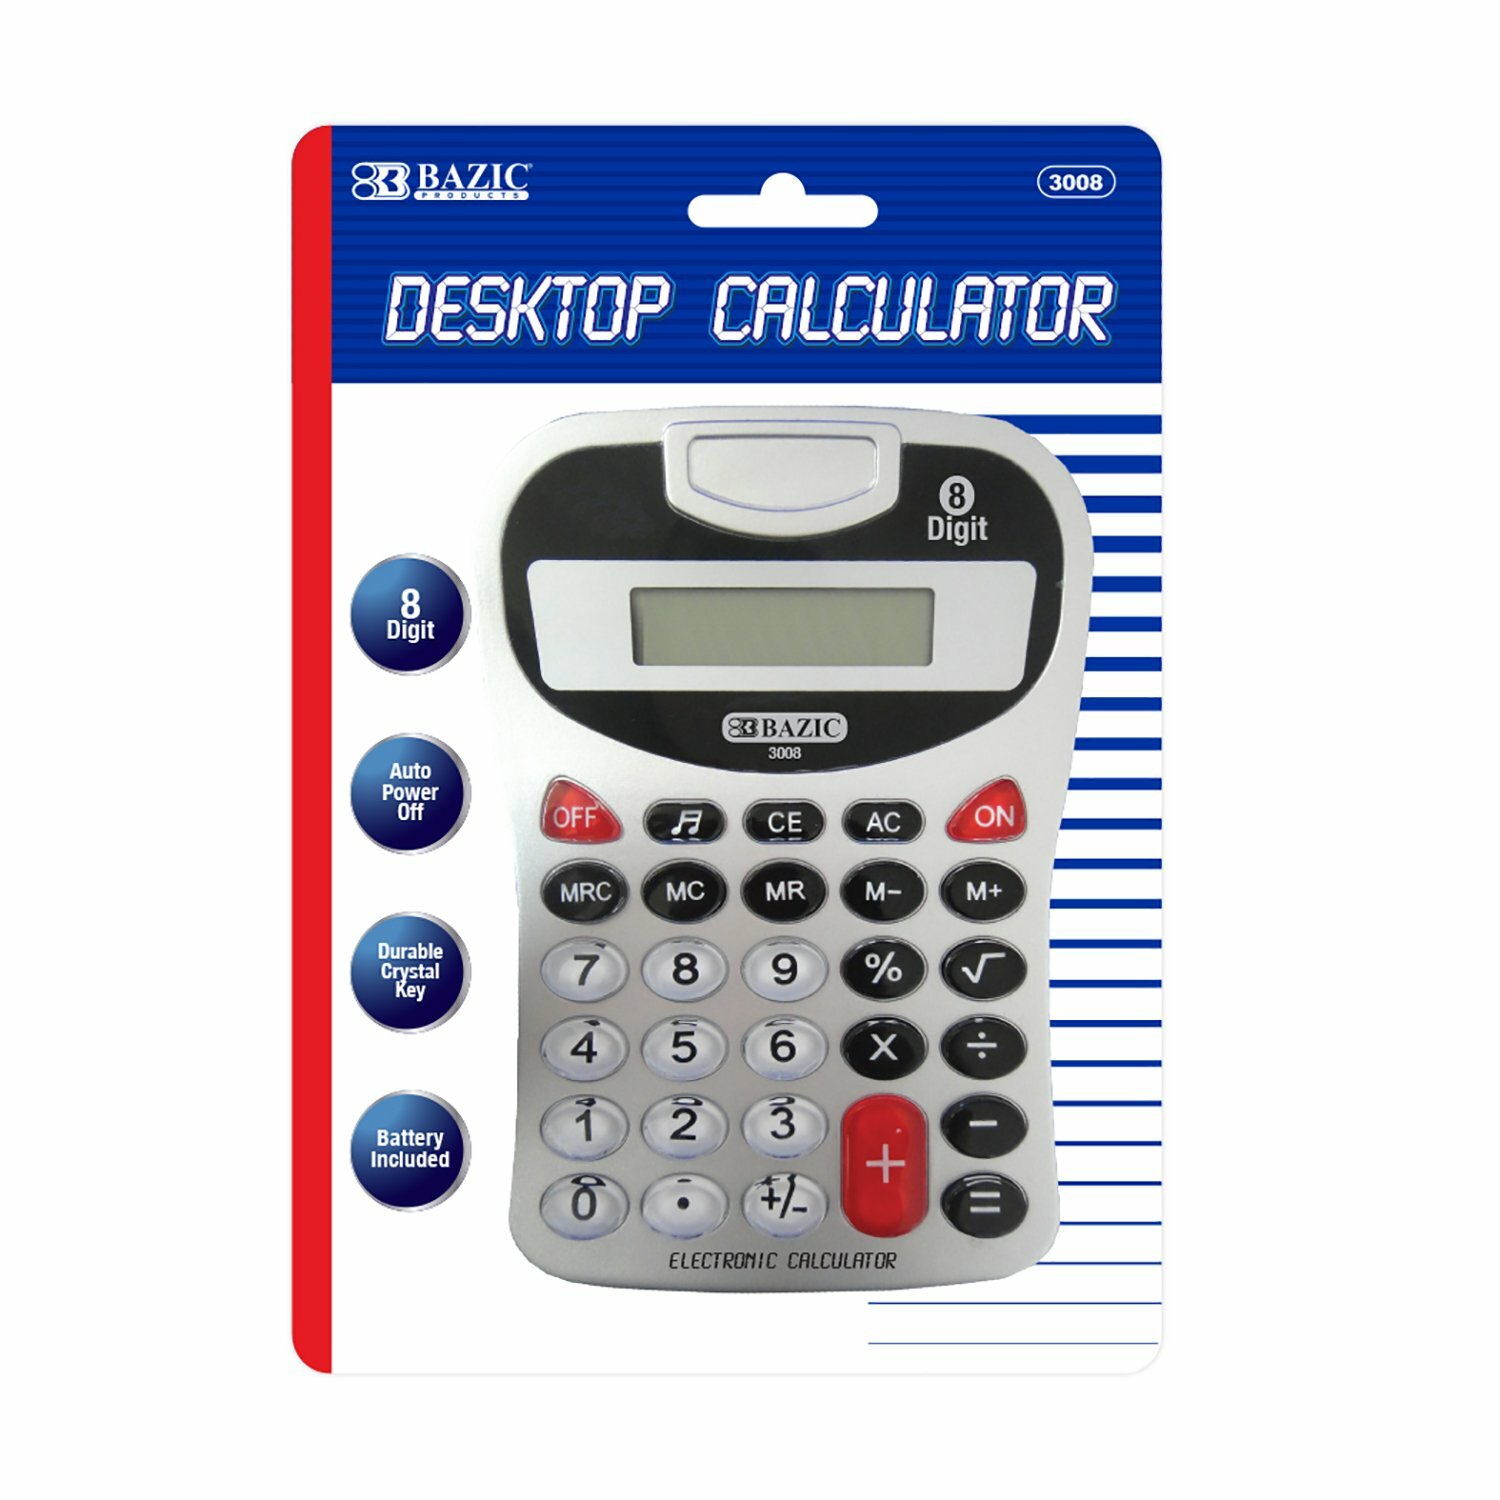 Calculator/Desktop (BAZ 3008)